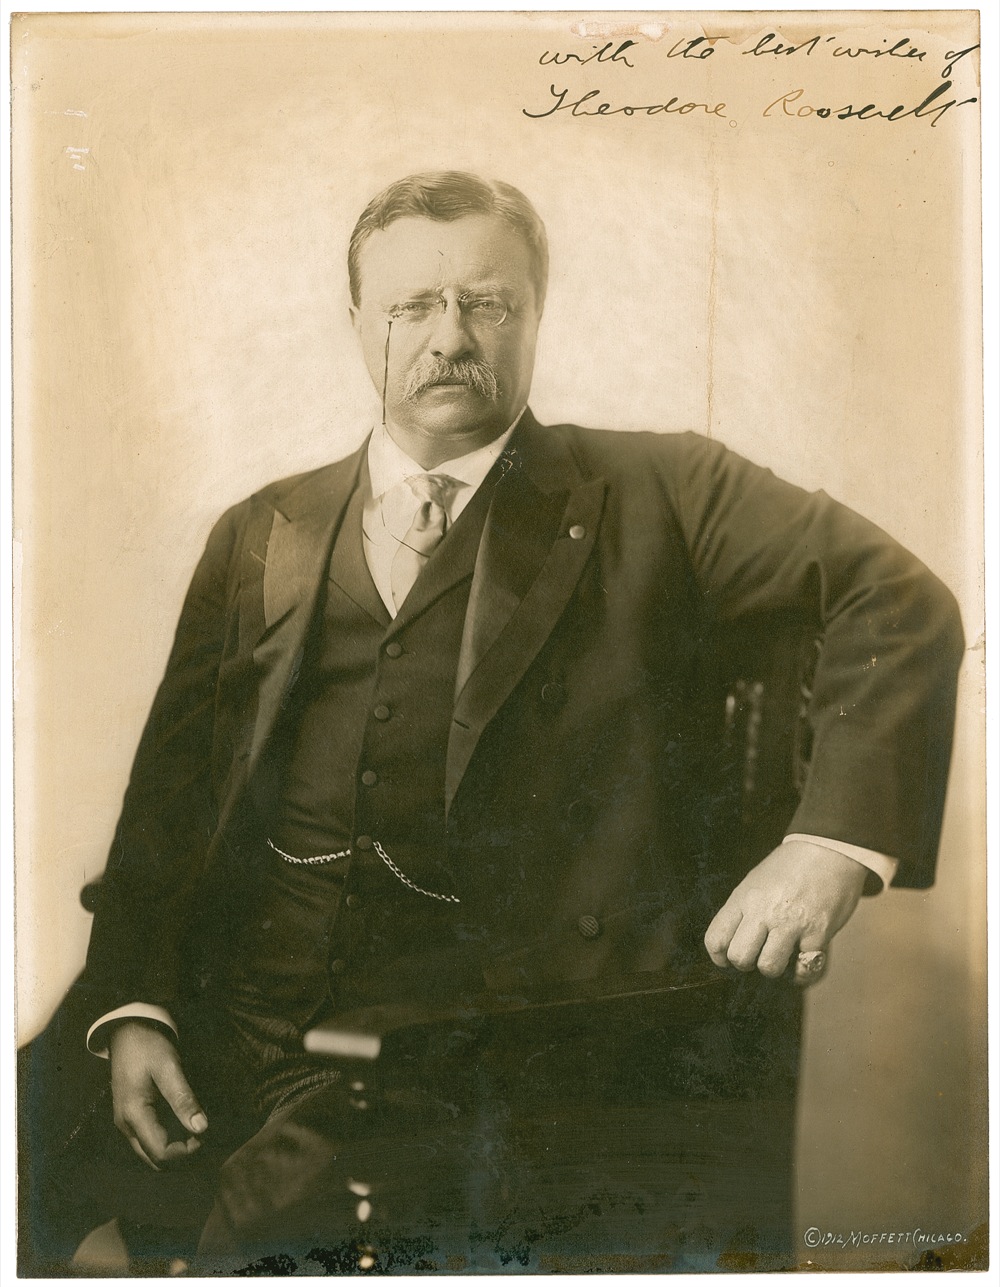 Lot #105 Theodore Roosevelt